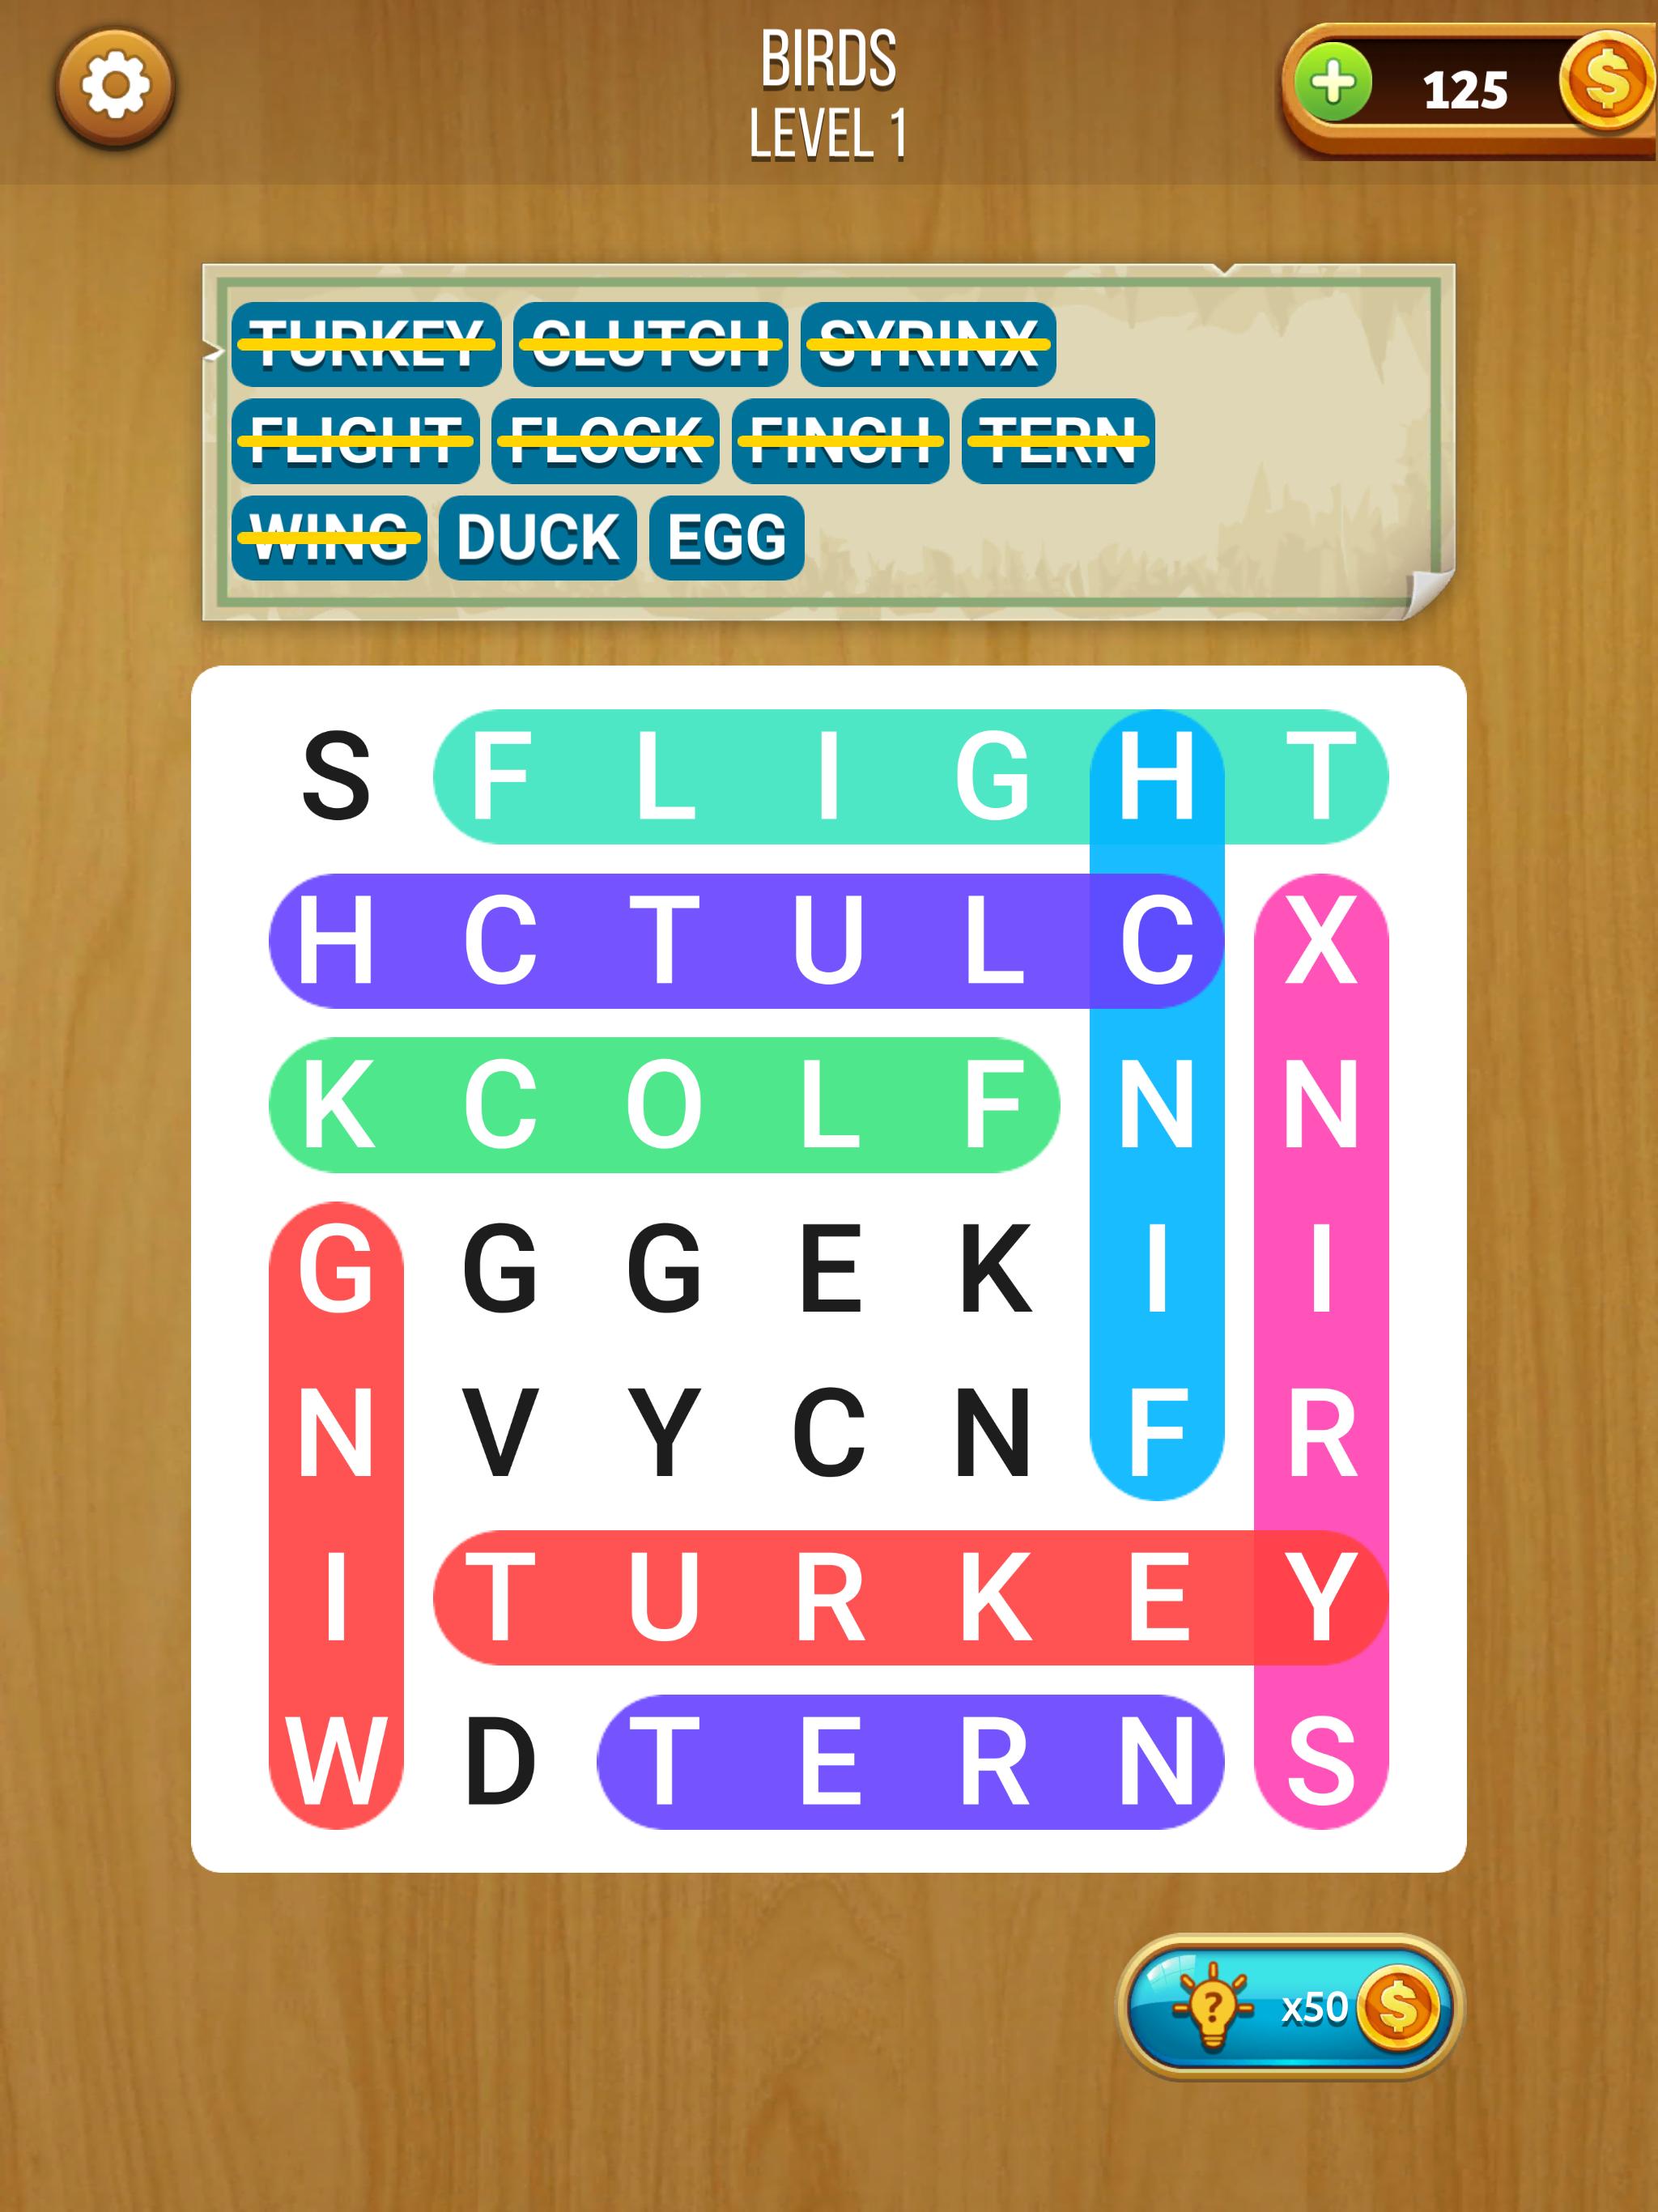 Hidden Words Word Search CrossWord Fun Game 1.0.1 Screenshot 16